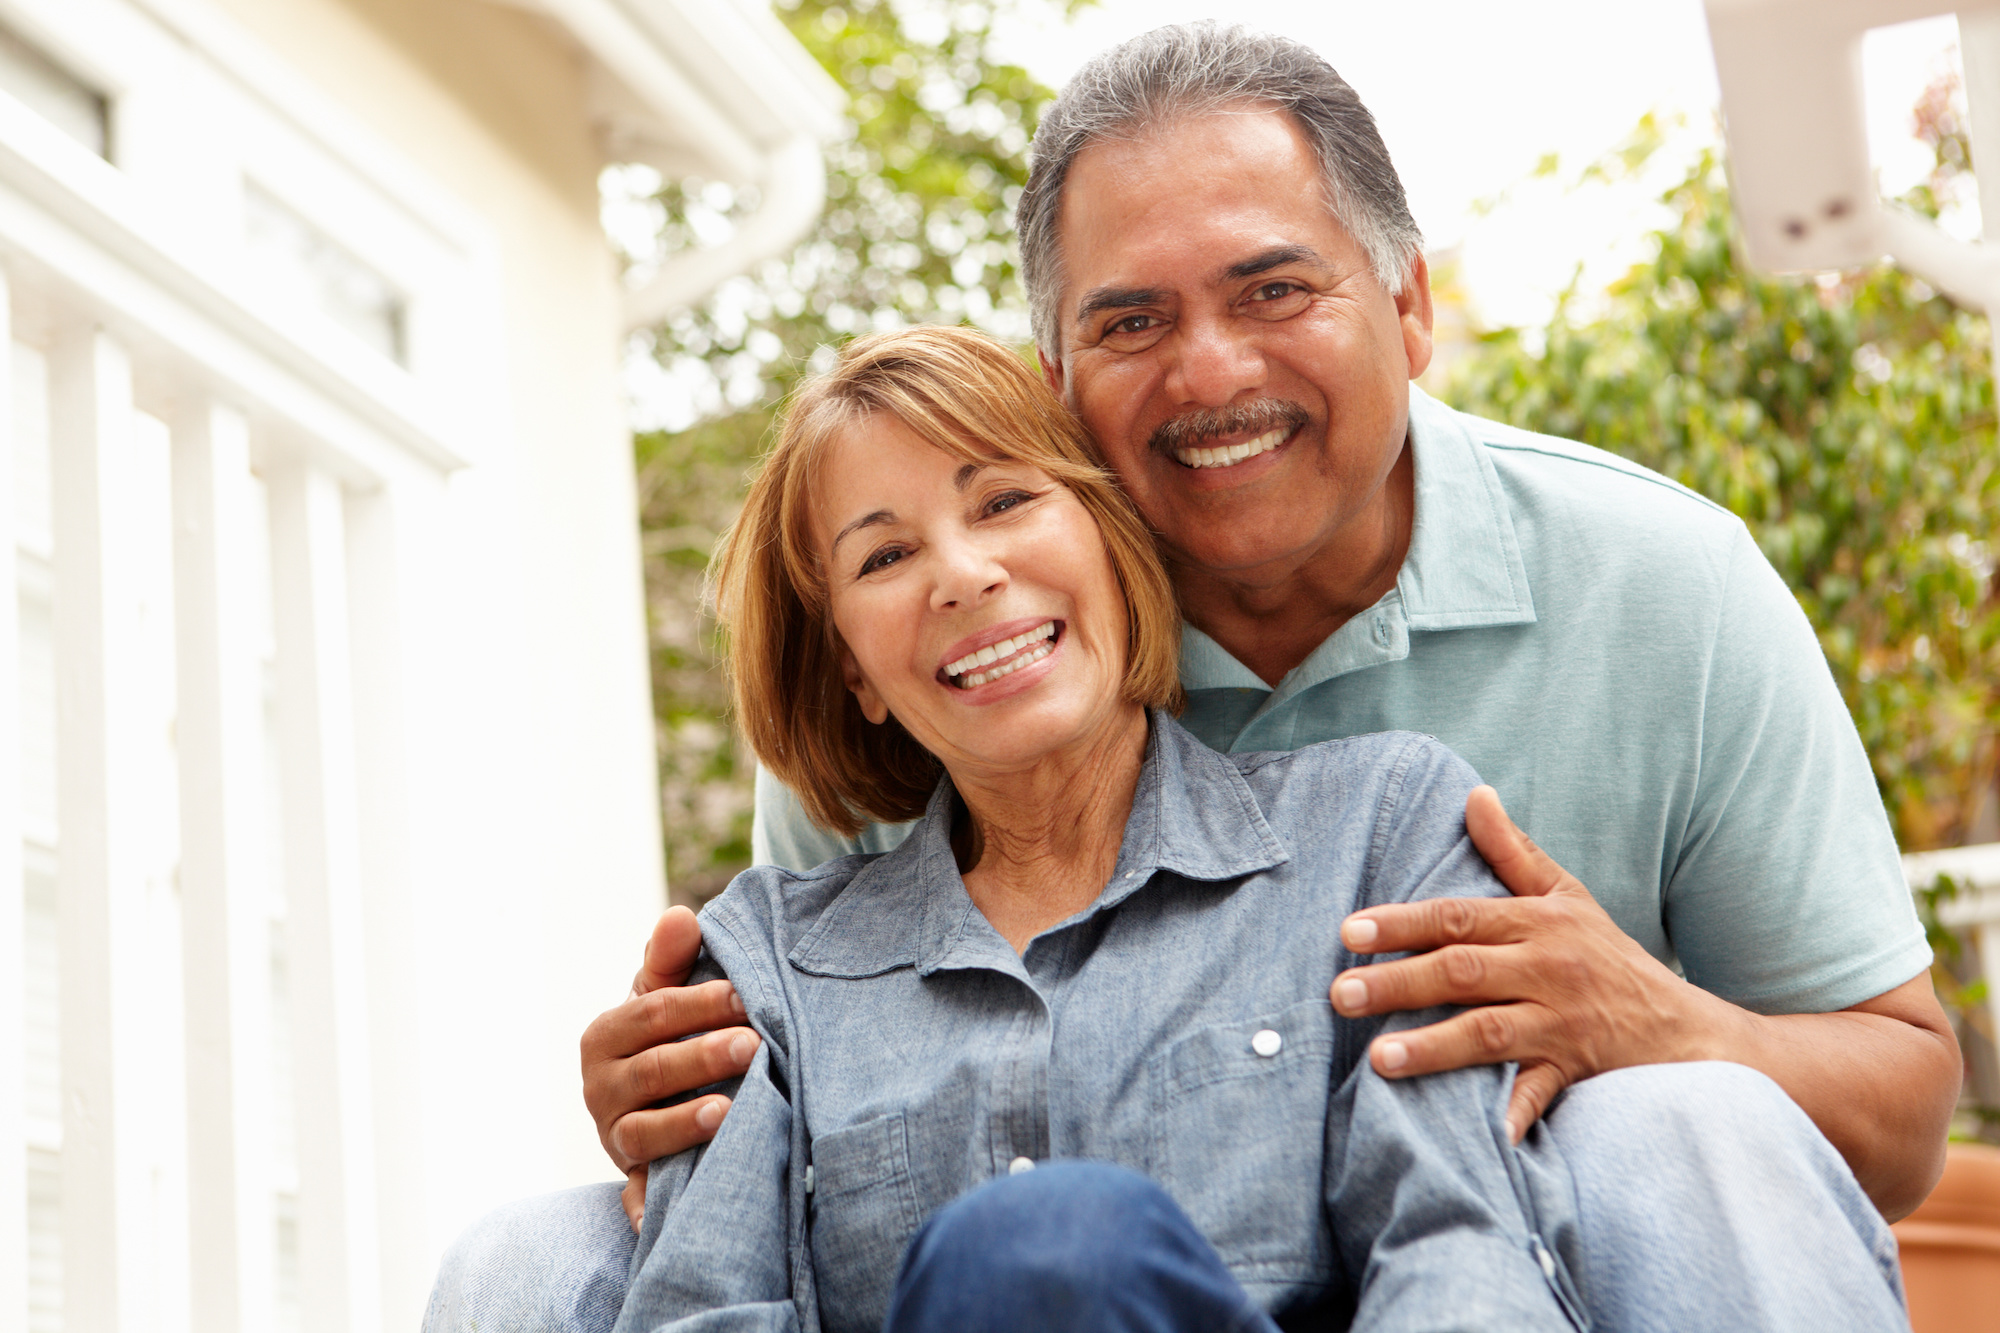 Parent Visa Feature Image - Older Couple / Parents Wishing to Live in Australia